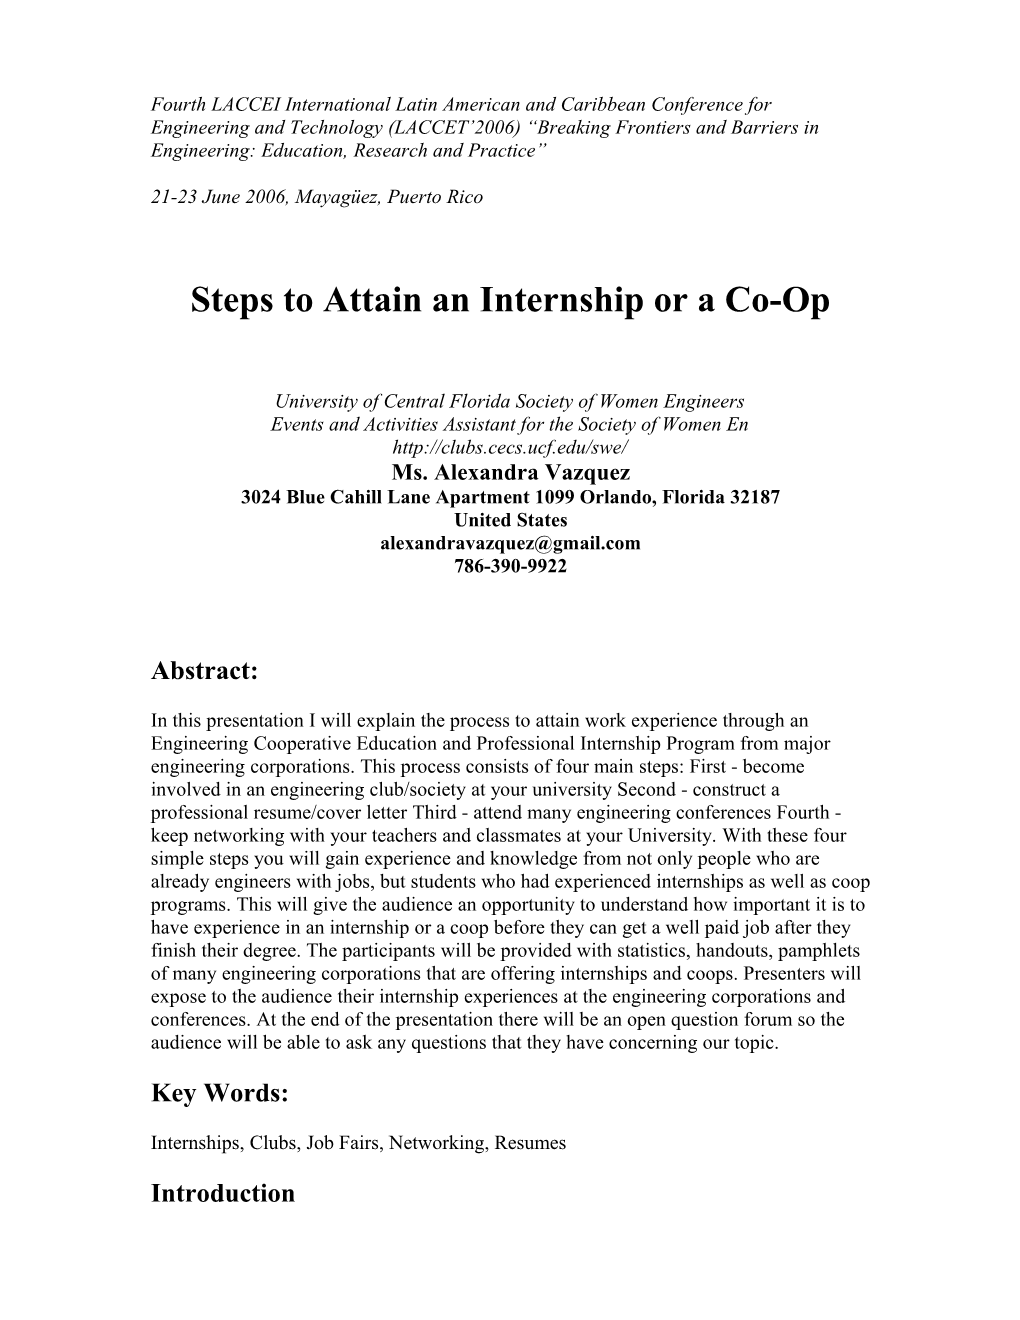 Steps to Attain an Internship Or a Co-Op